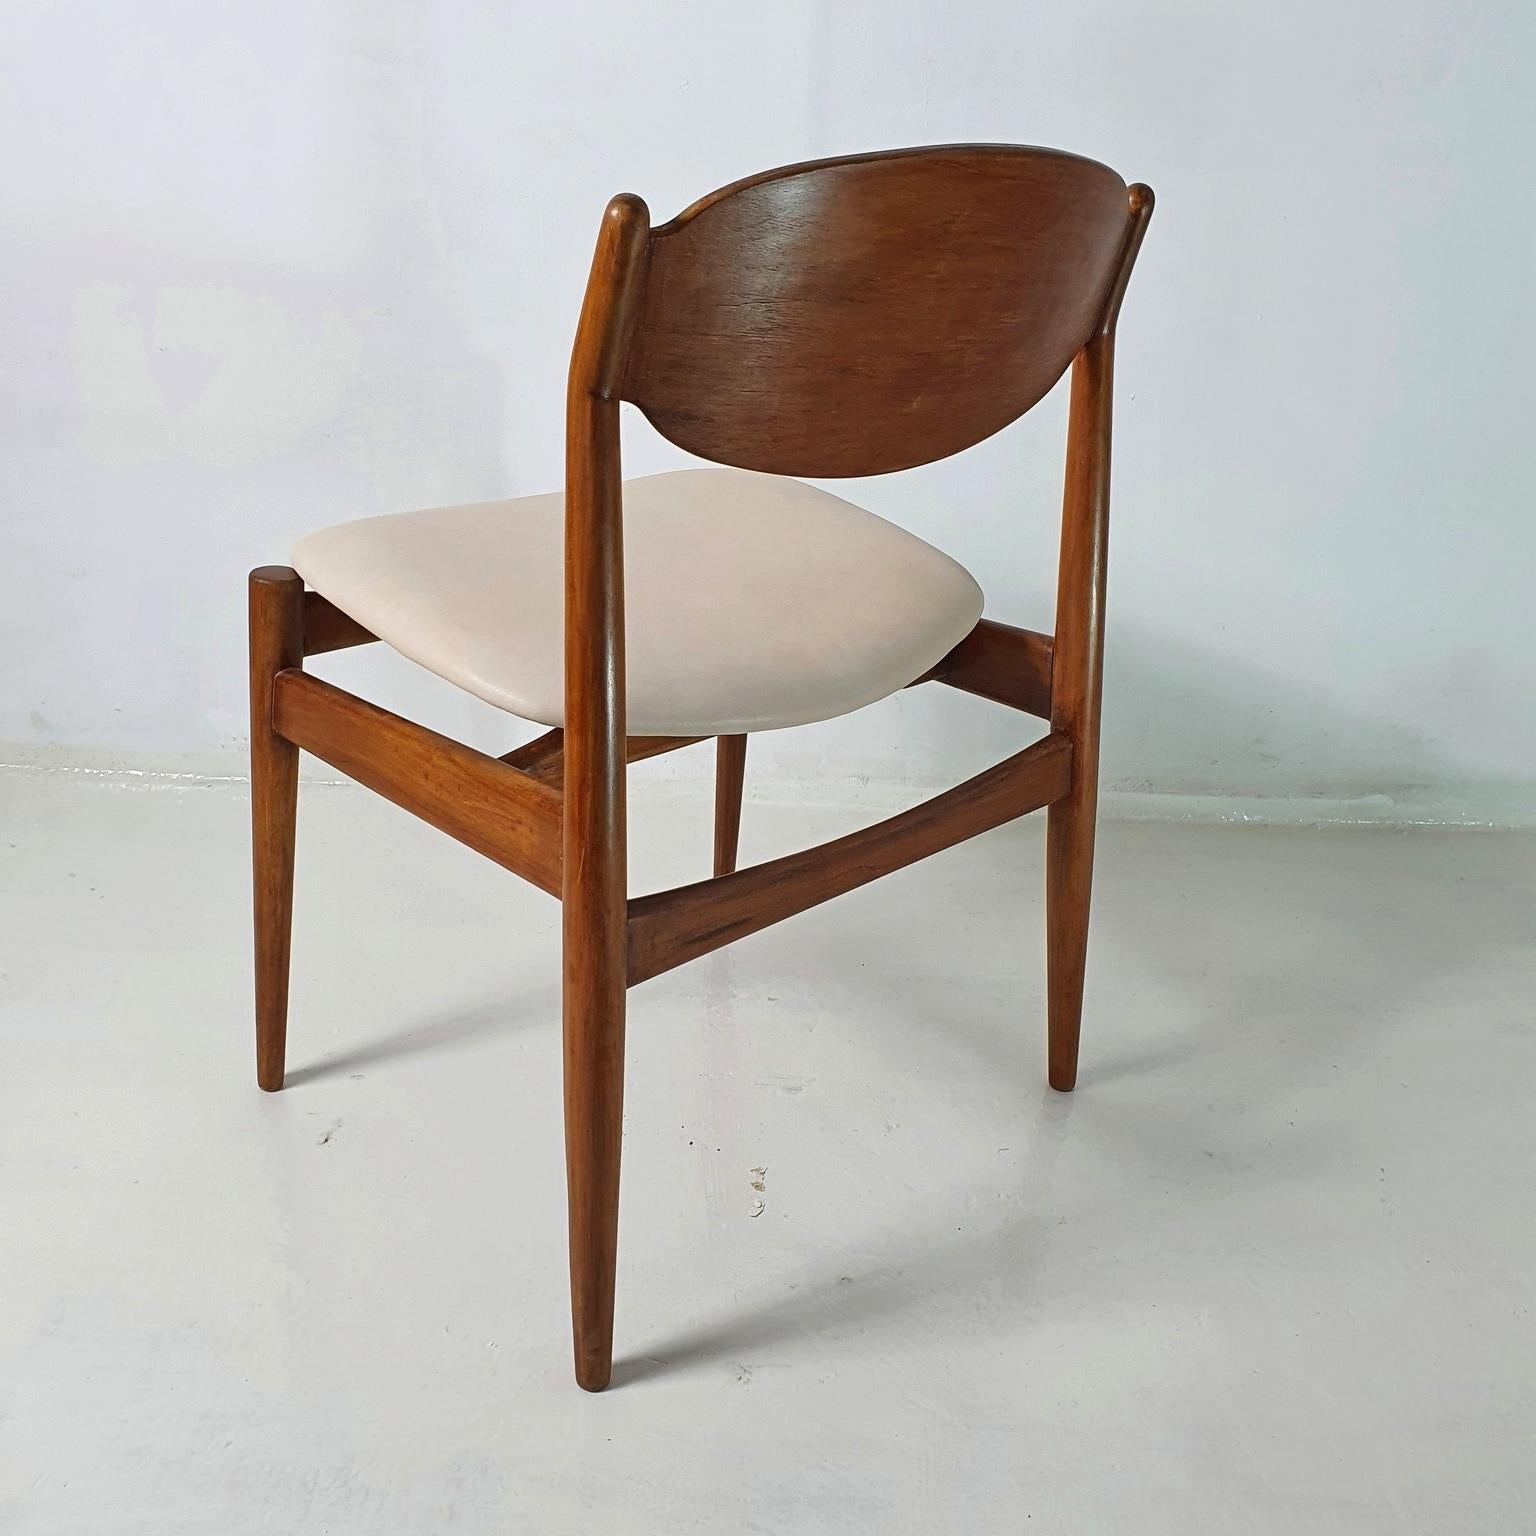 20th Century Midcentury Chairs by Leonardo Fiori for ISA Bergamo Italy